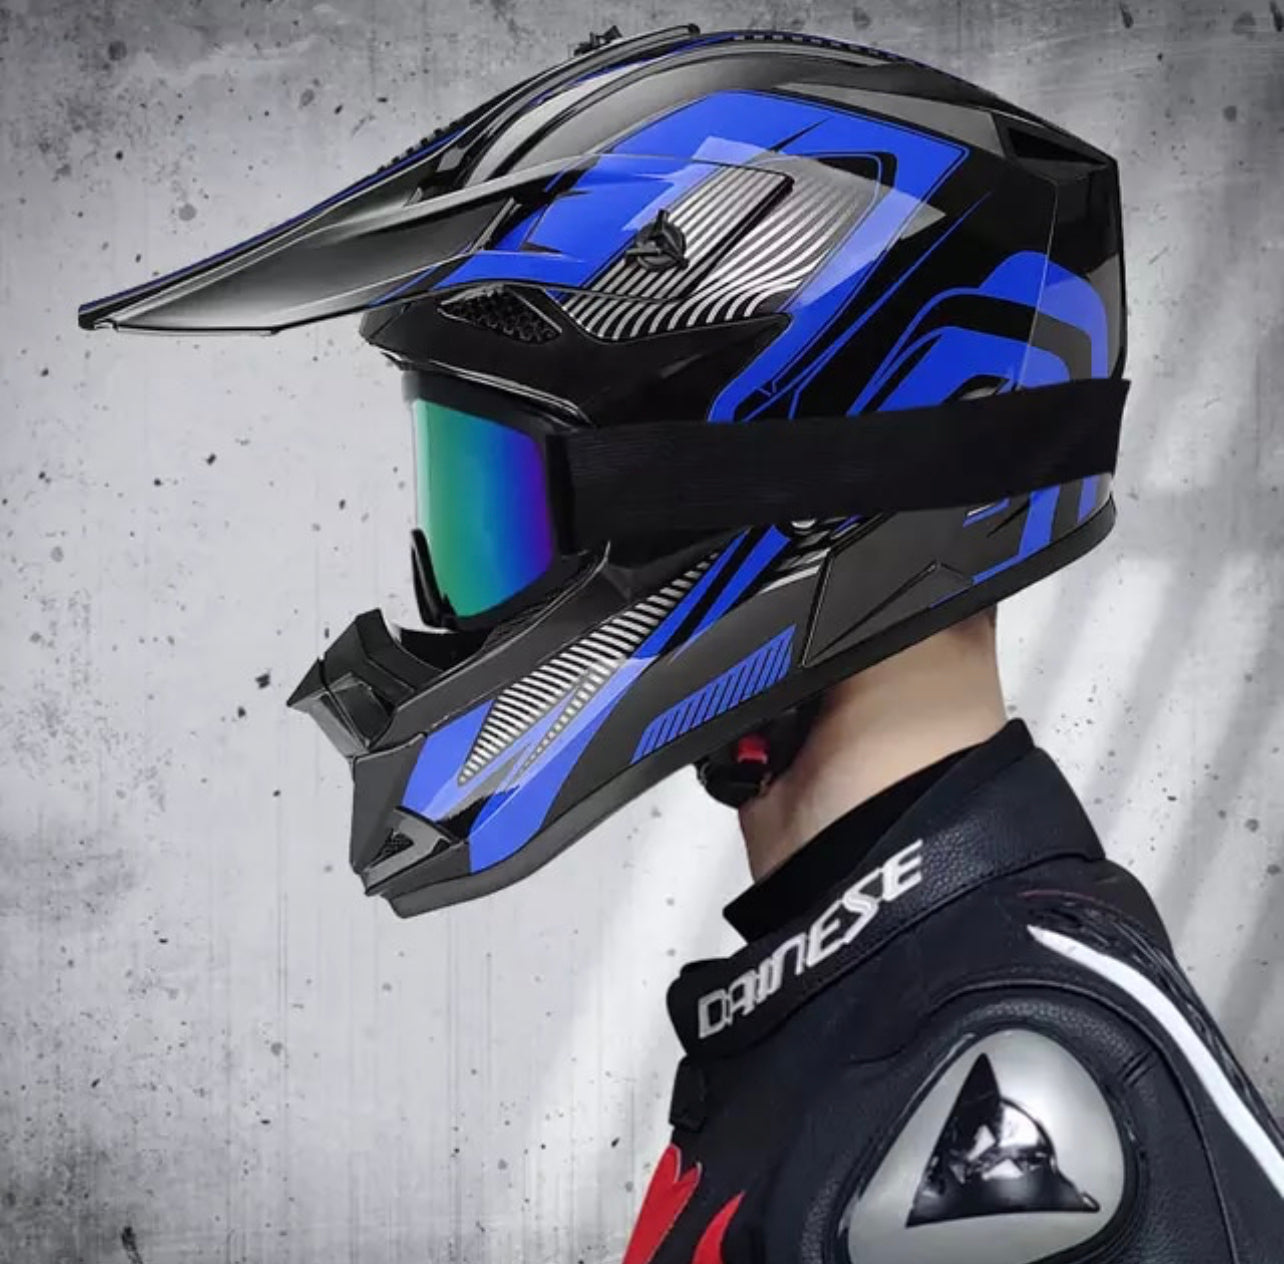 SurRonshop Motocross Helmet